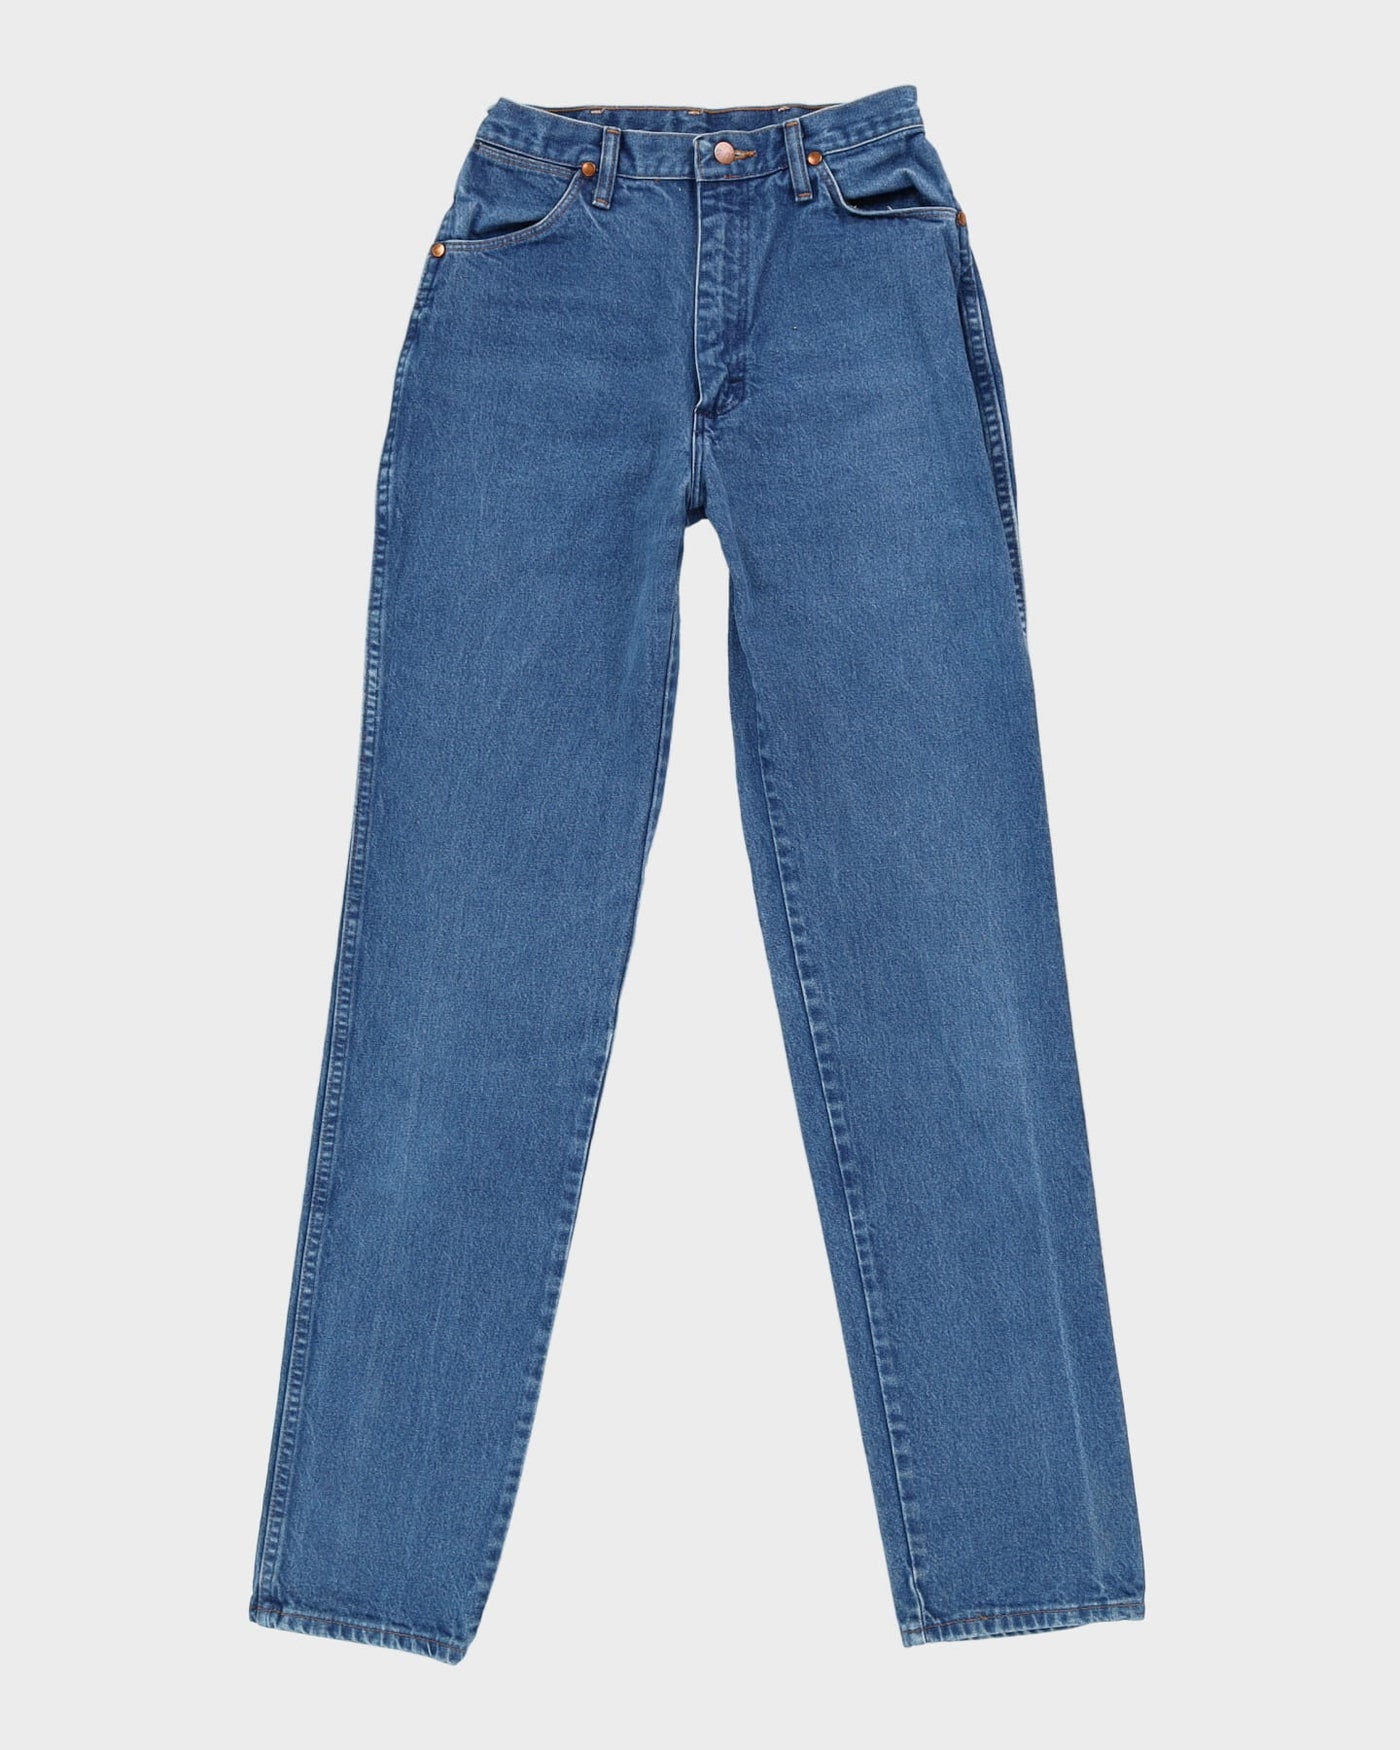 Vintage 90s Wrangler Blue Jeans - W26 L35